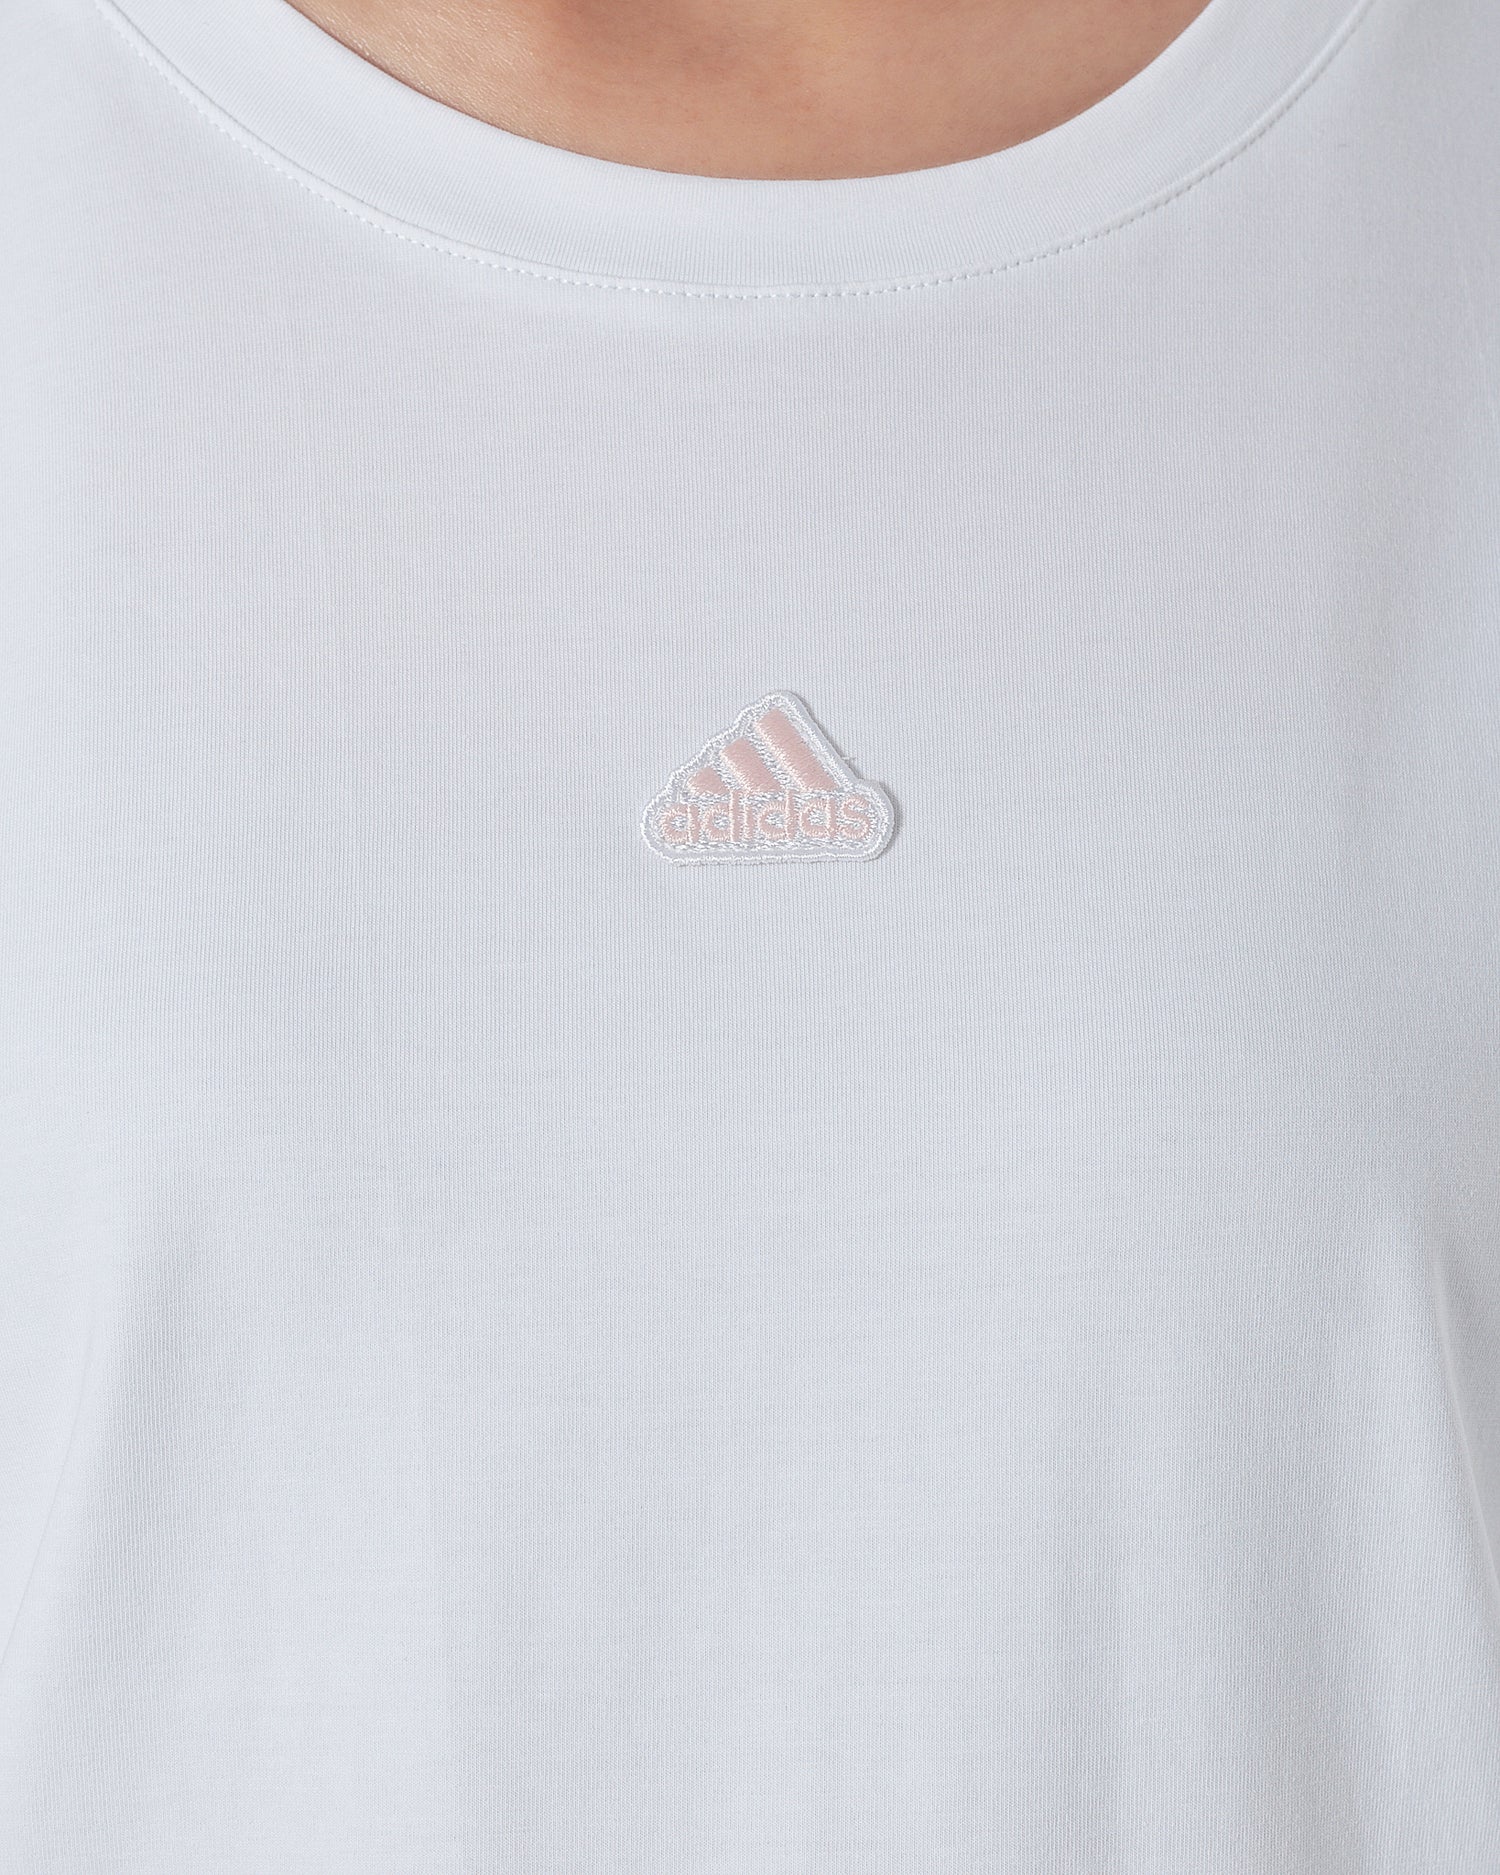 ADI Logo Embroidered Lady White T-Shirt 13.90